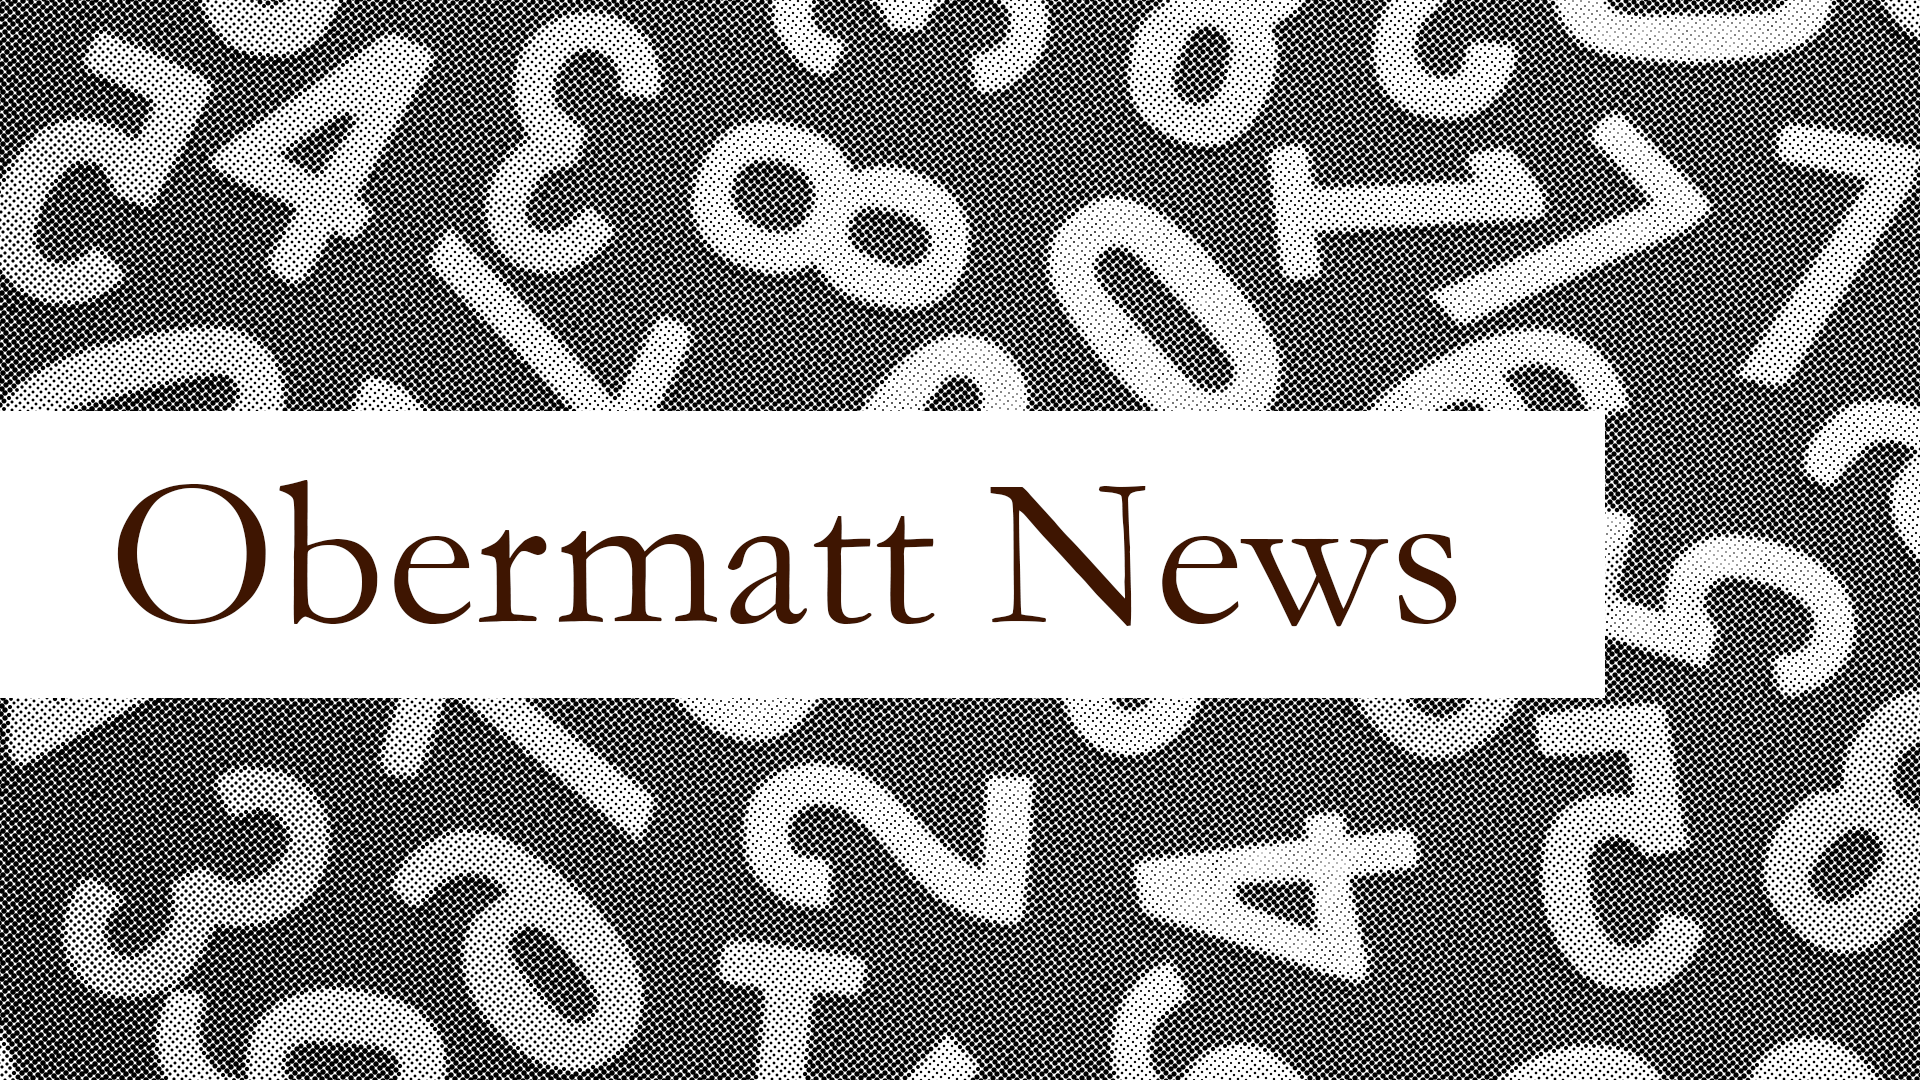 News at Obermatt: New in-depth, behind the numbers analysis